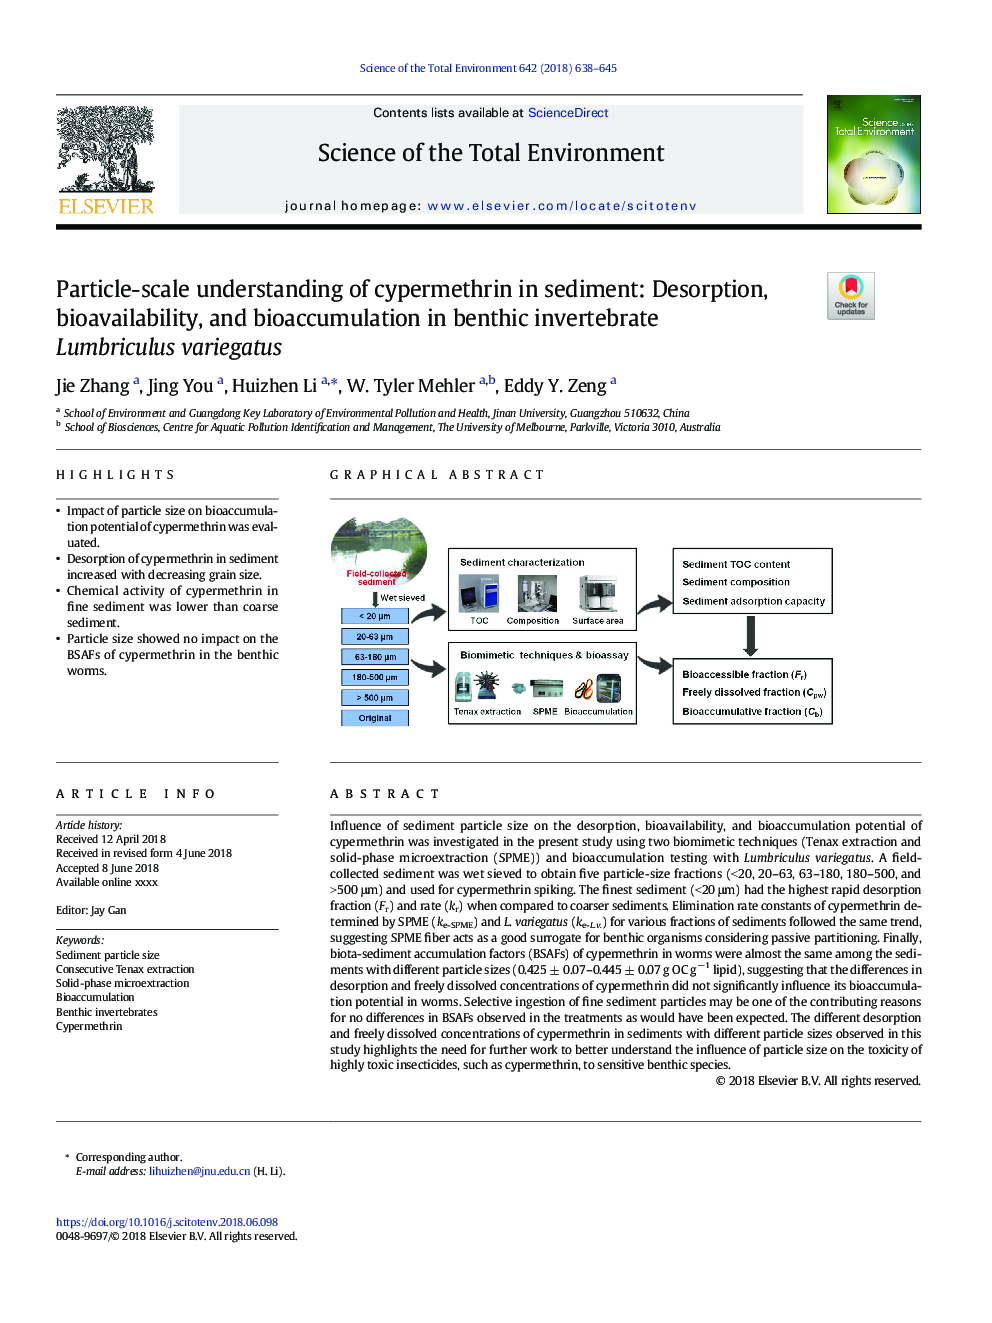 Particle-scale understanding of cypermethrin in sediment: Desorption, bioavailability, and bioaccumulation in benthic invertebrate Lumbriculus variegatus